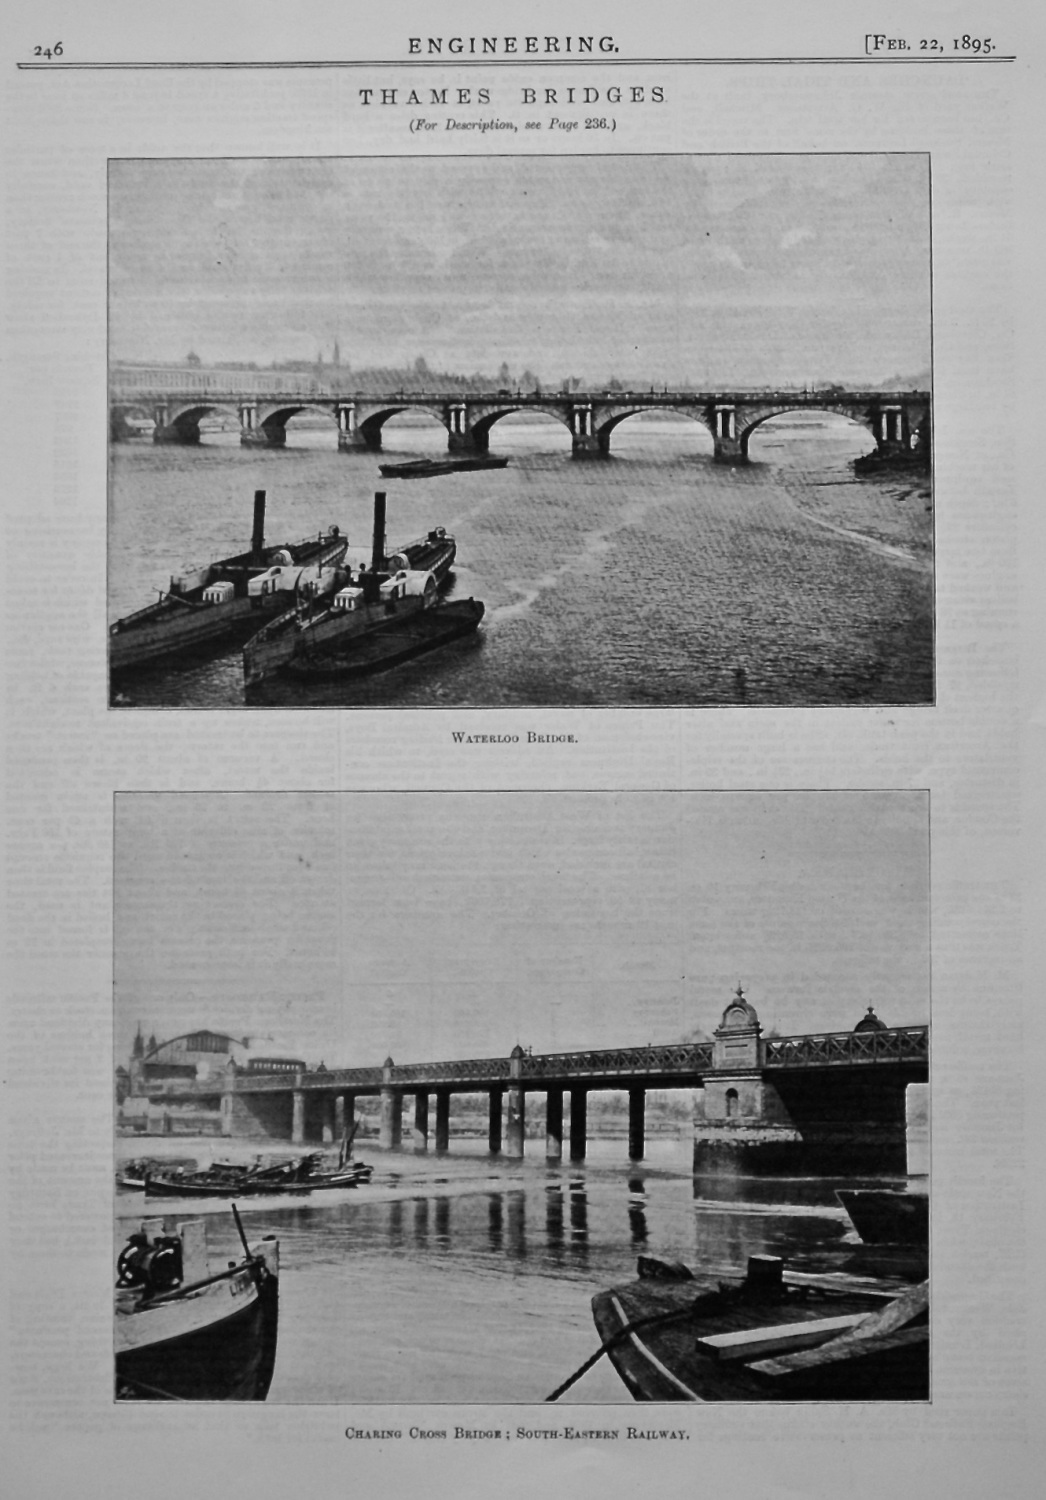 Thames Bridges : Waterloo Bridge & Charing Cross Bridge, South-Eastern Rail